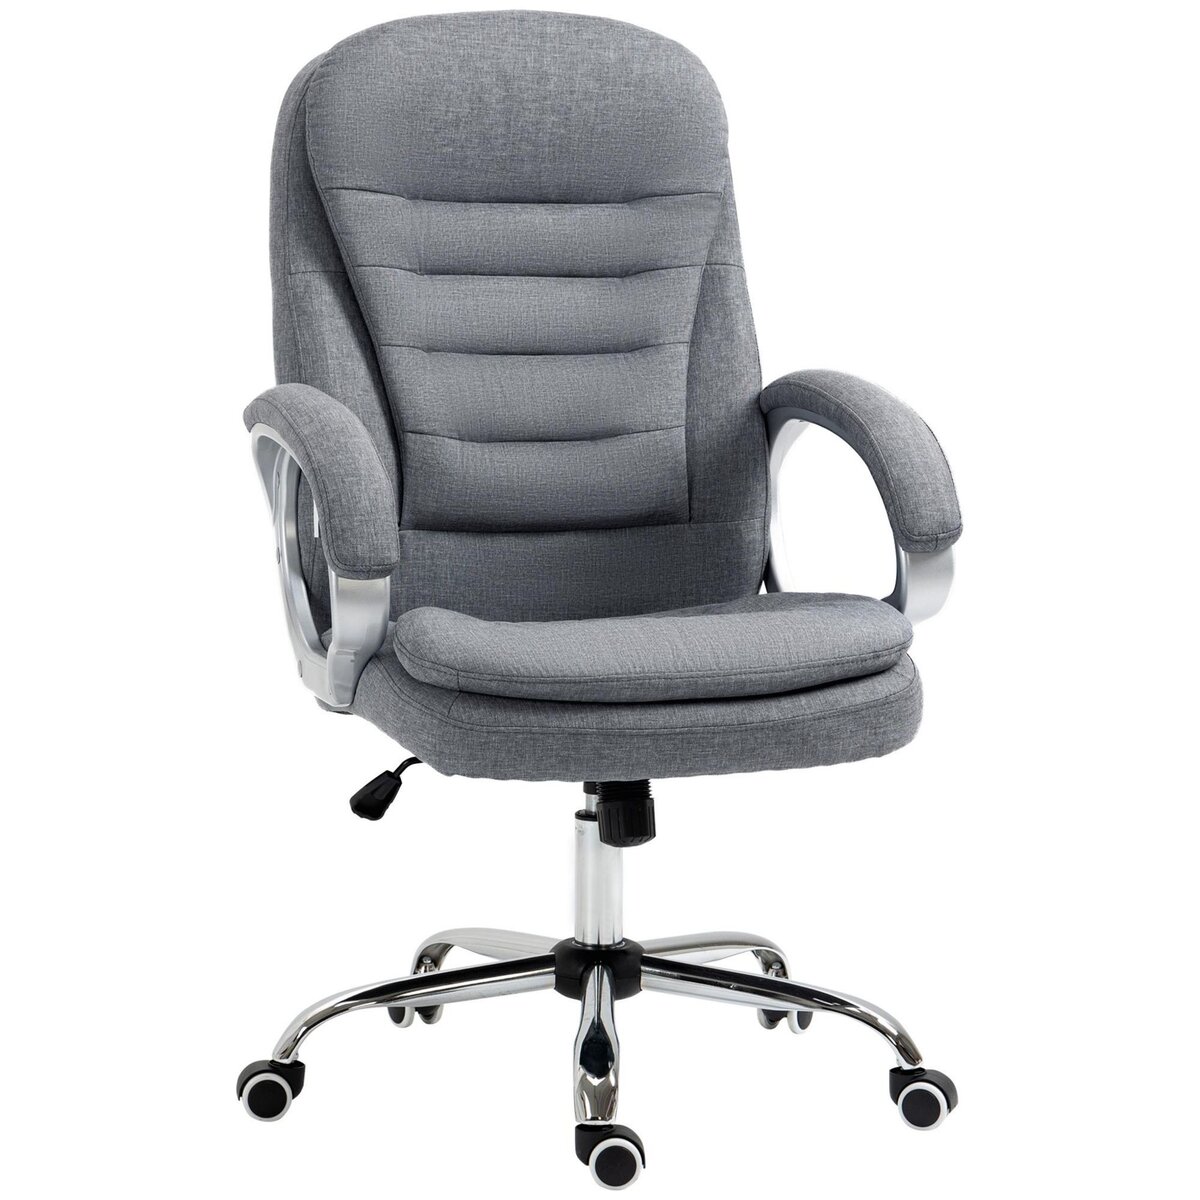 HOMCOM Fauteuil de bureau manager chaise de bureau ergonomique